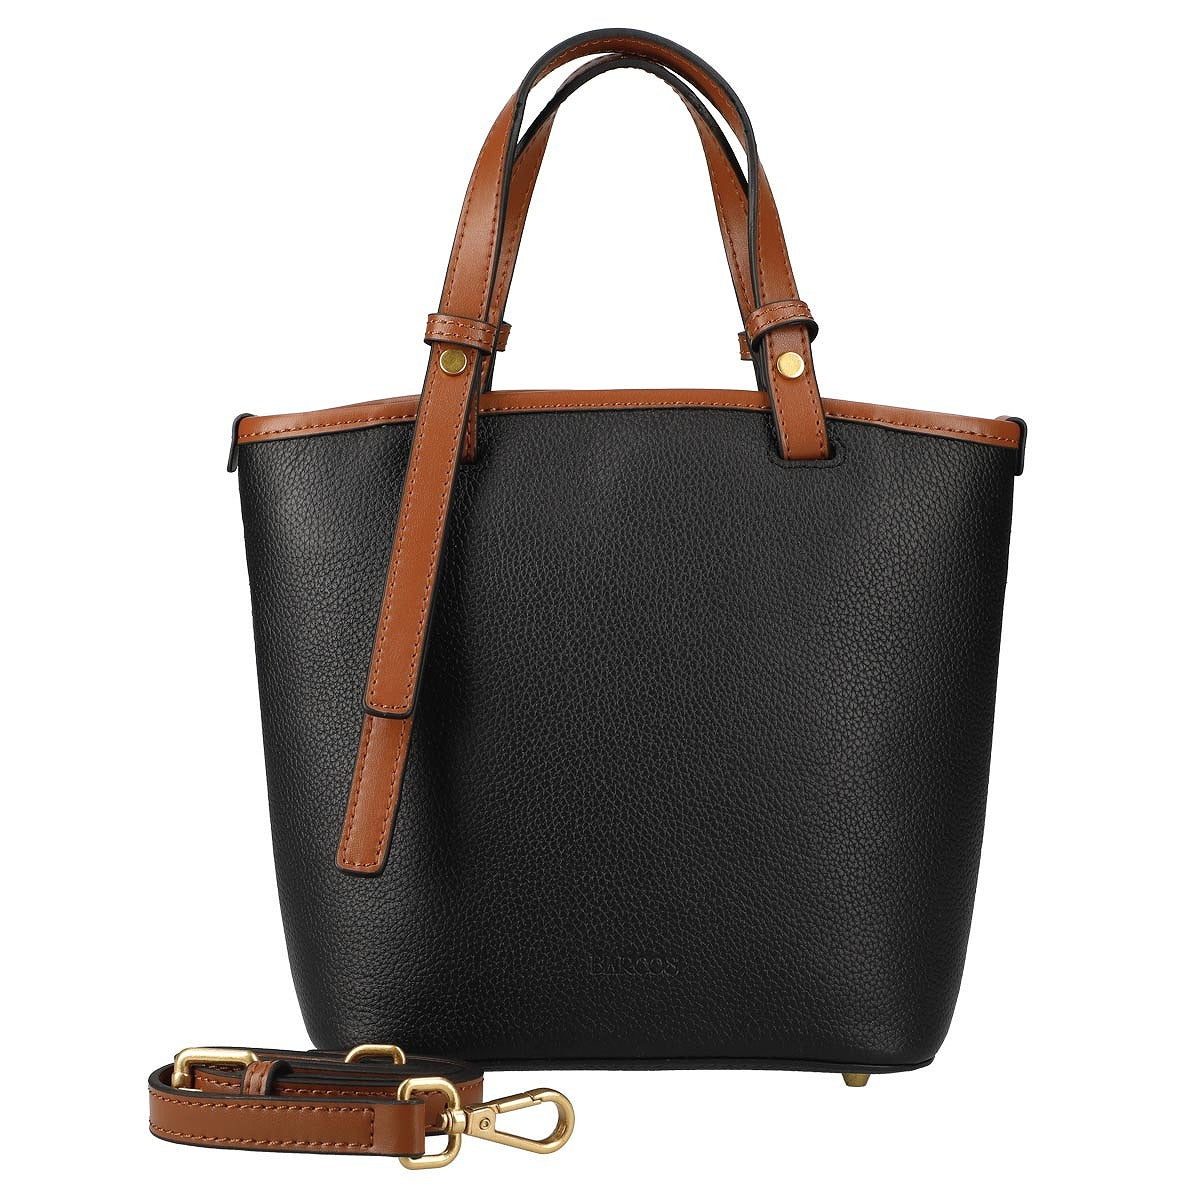 Bucket Tote 2 Color Tone Leather Handbag with Shoulder Strap Attachment